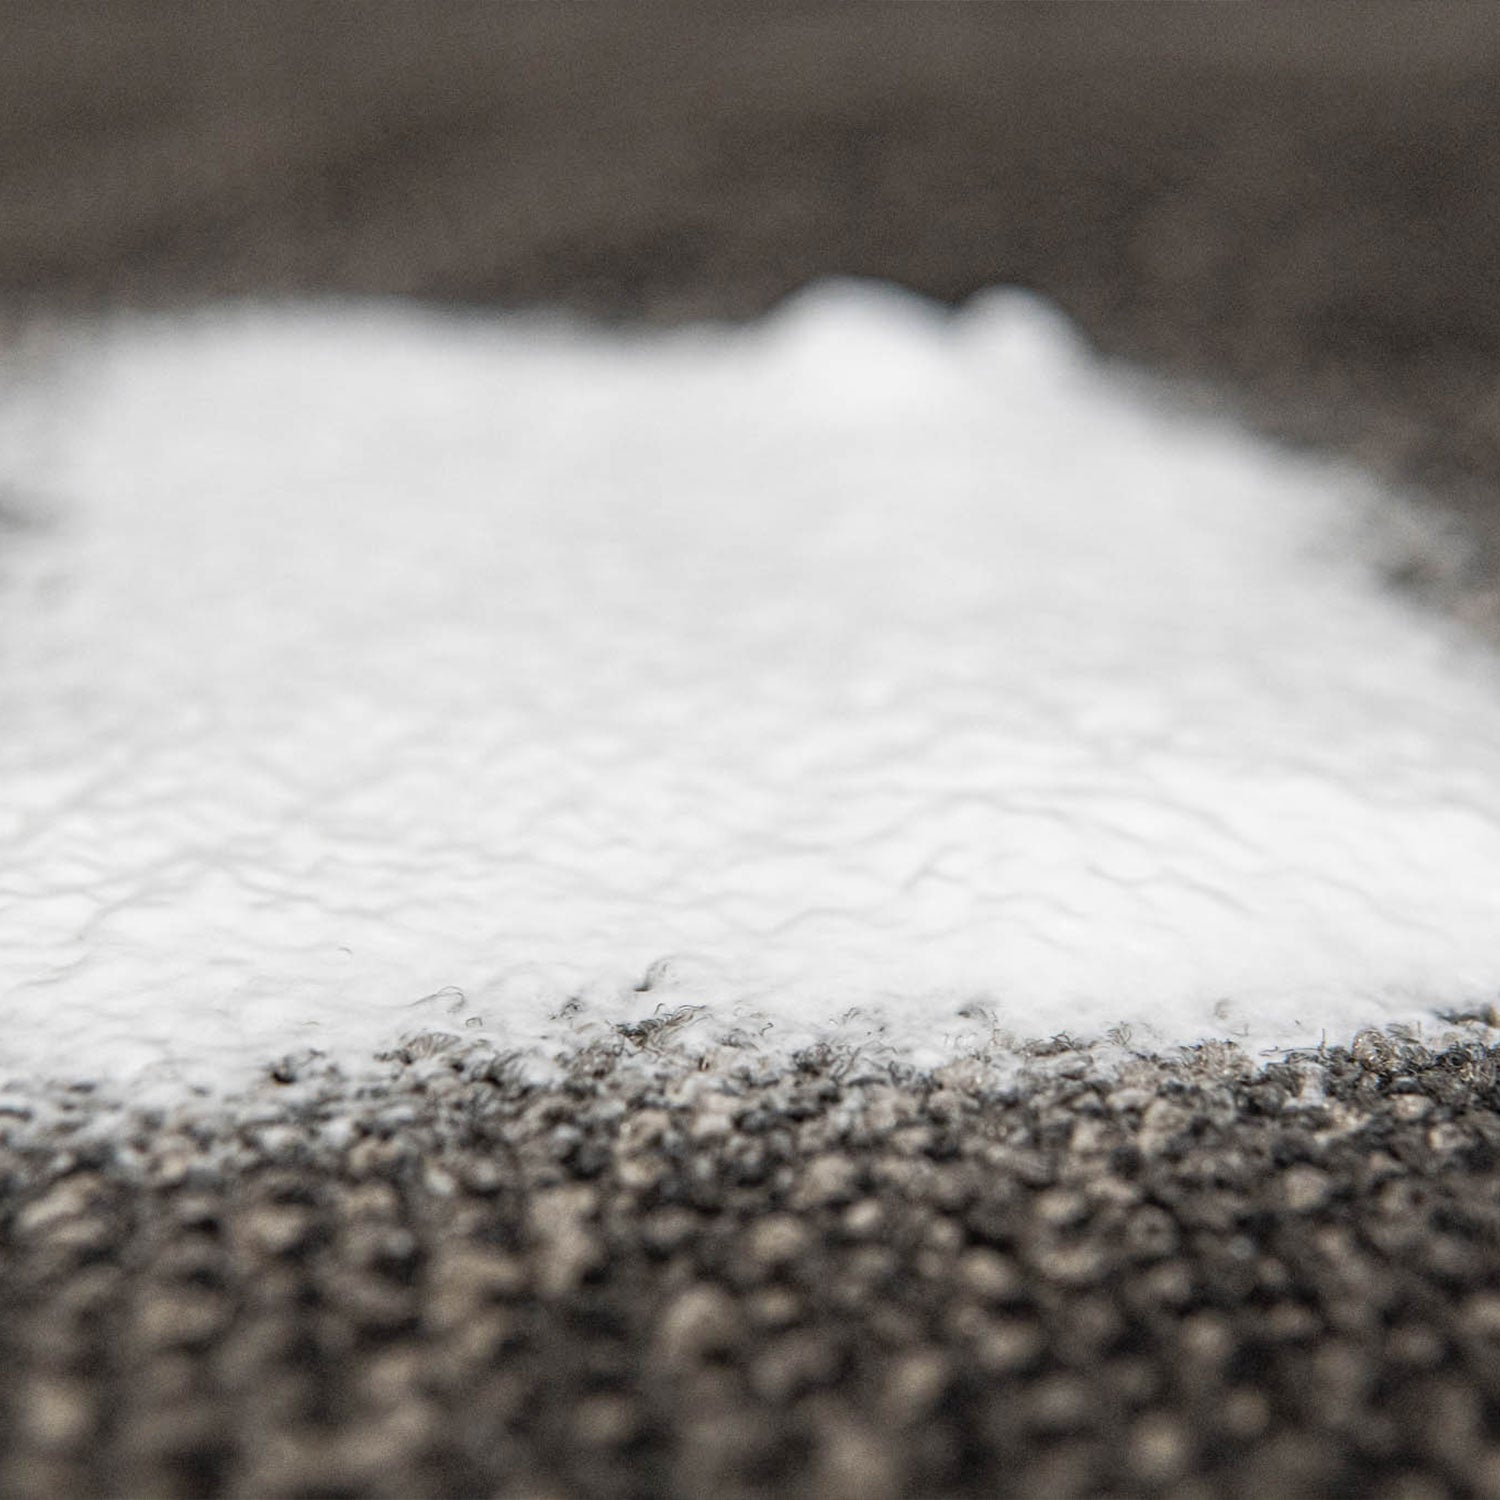 enzyme-activated-carpet-cleaner-aerosol-foam-on-carpet